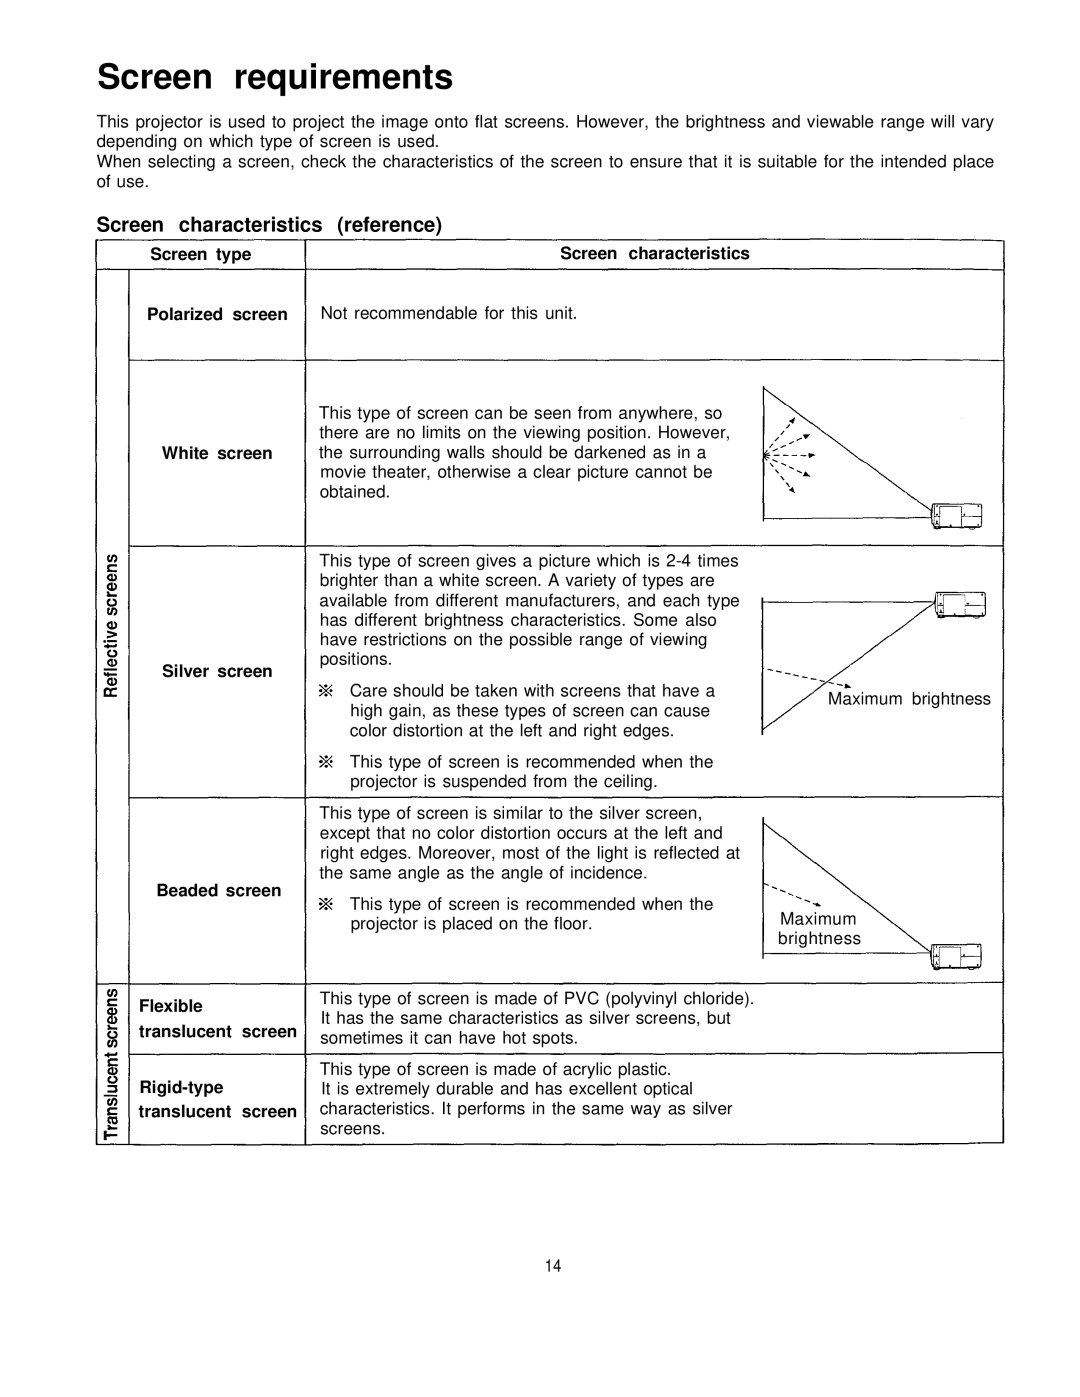 Panasonic PT-L795U manual Screen requirements, Screen characteristics reference 